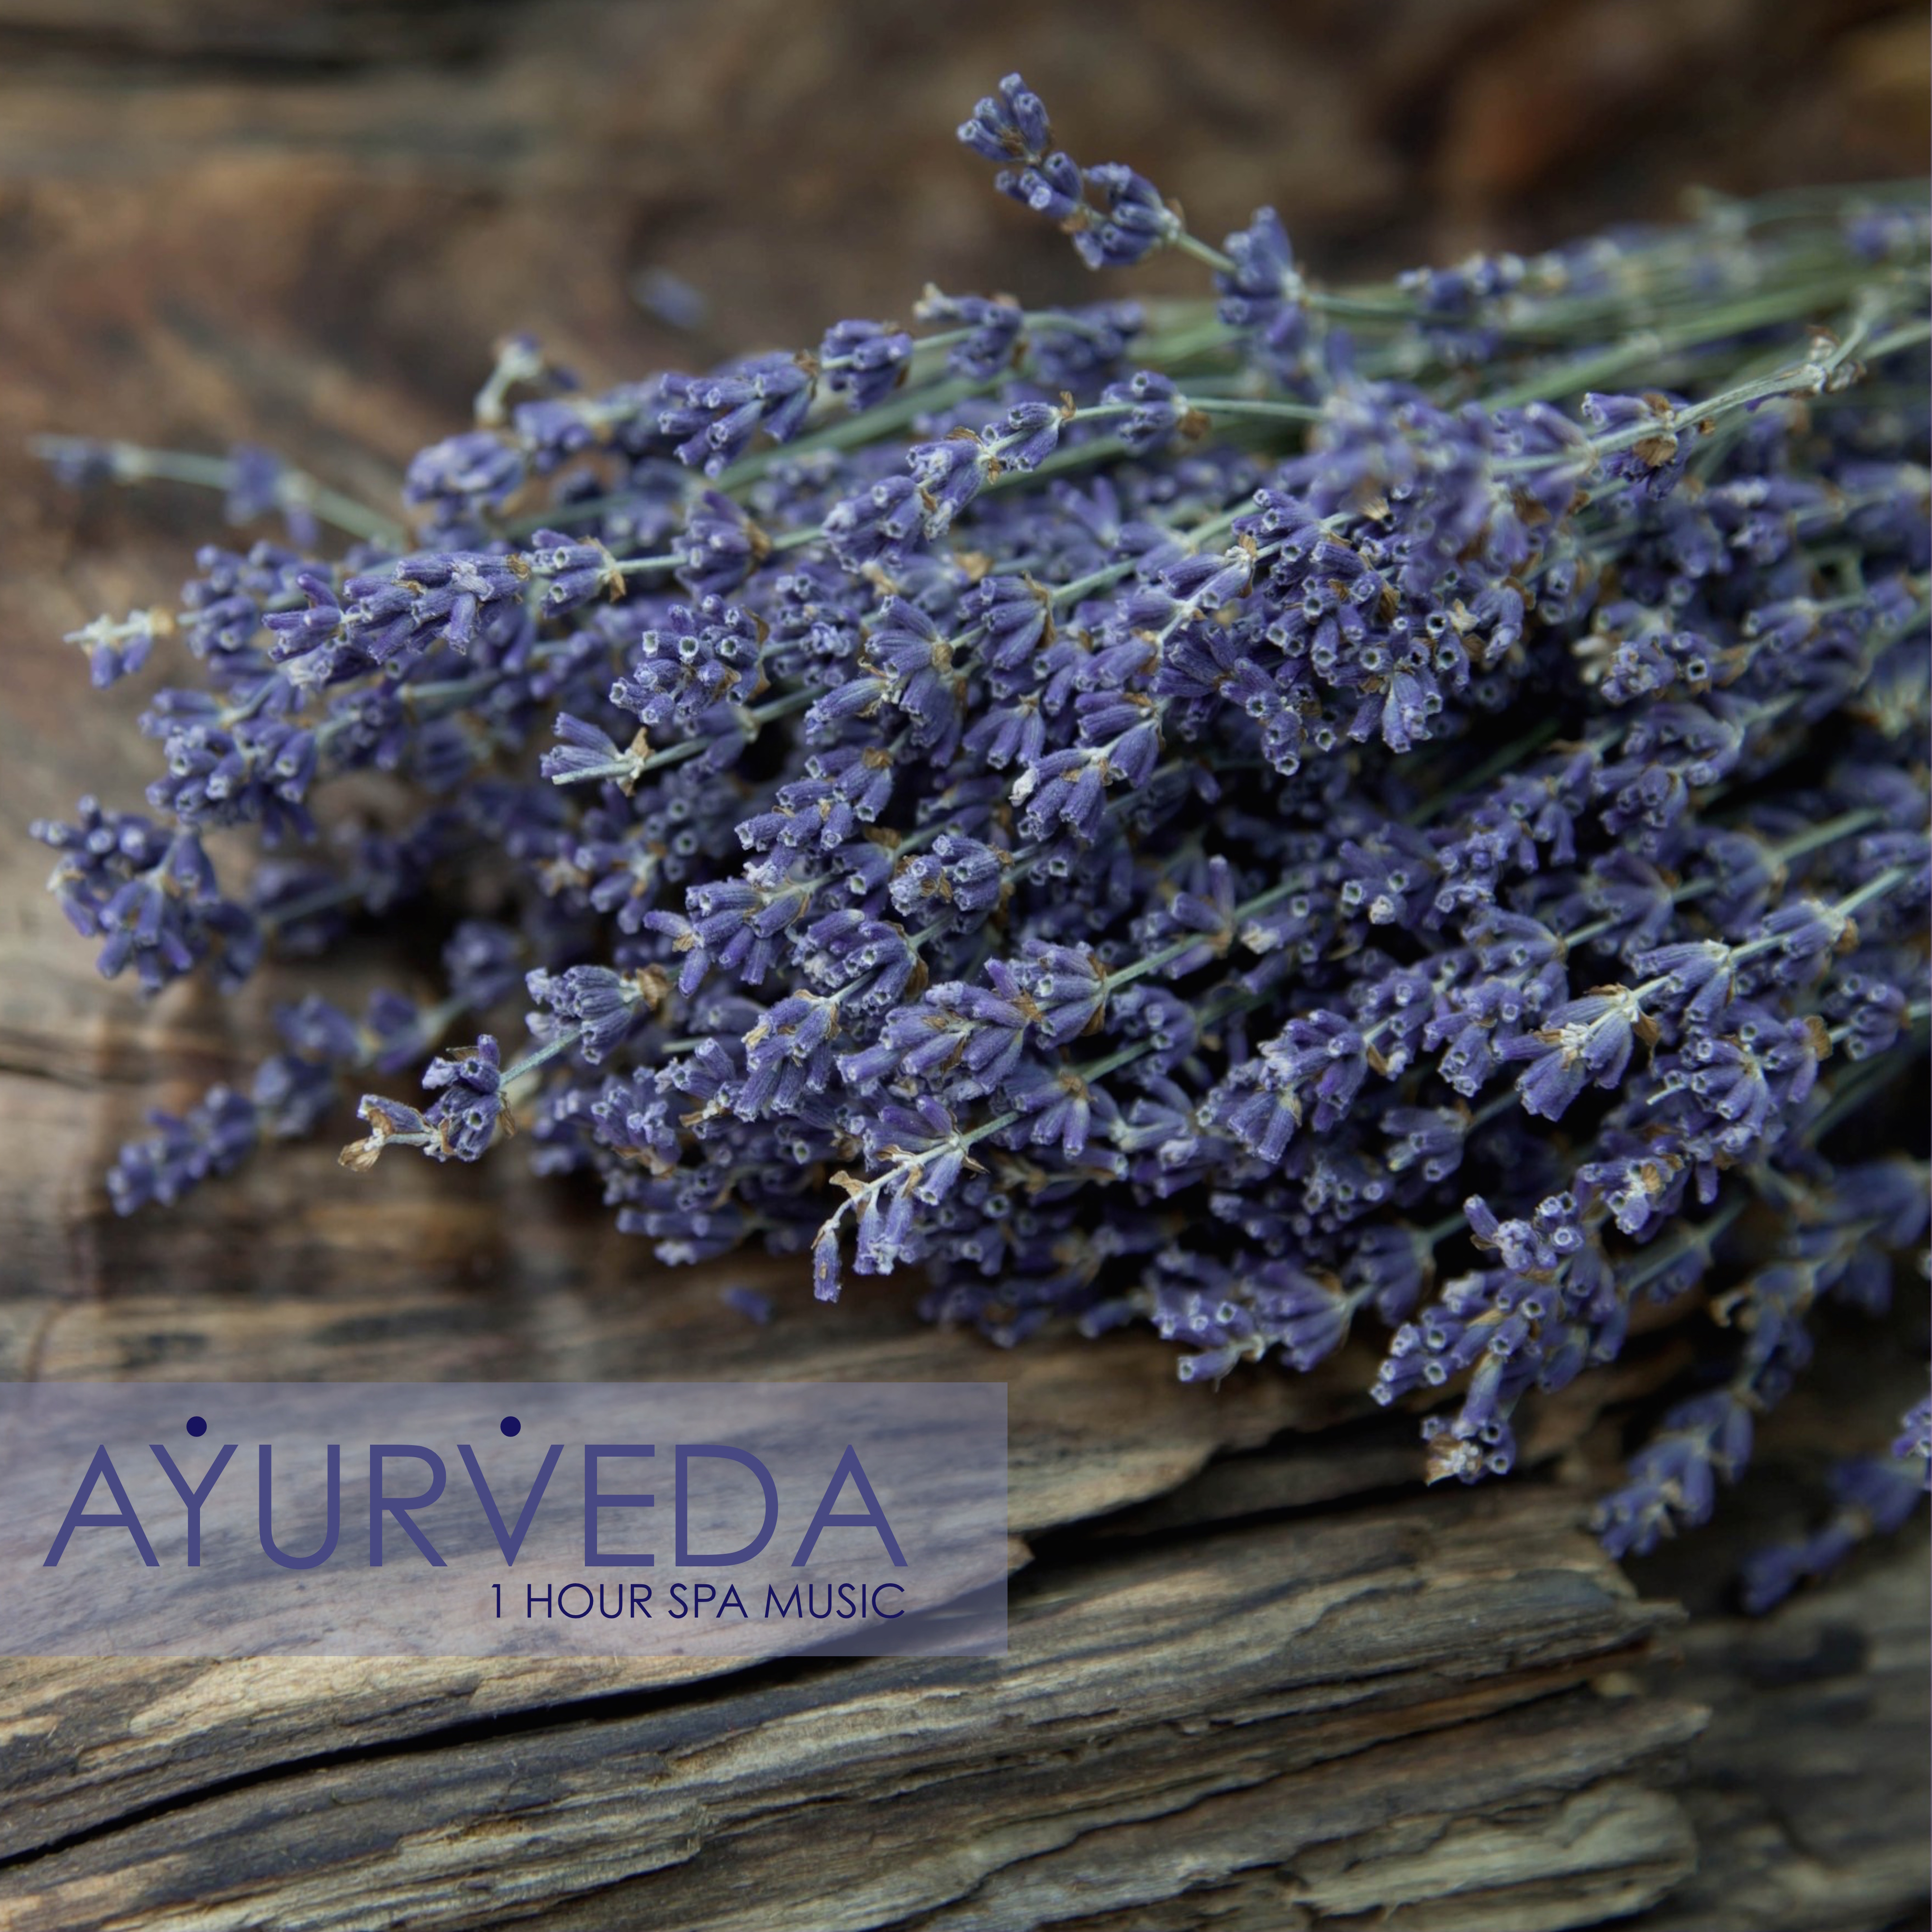 Ayurveda - Simple Spa Music for Ayurveda Massage and Ayurvedic Home Remedies